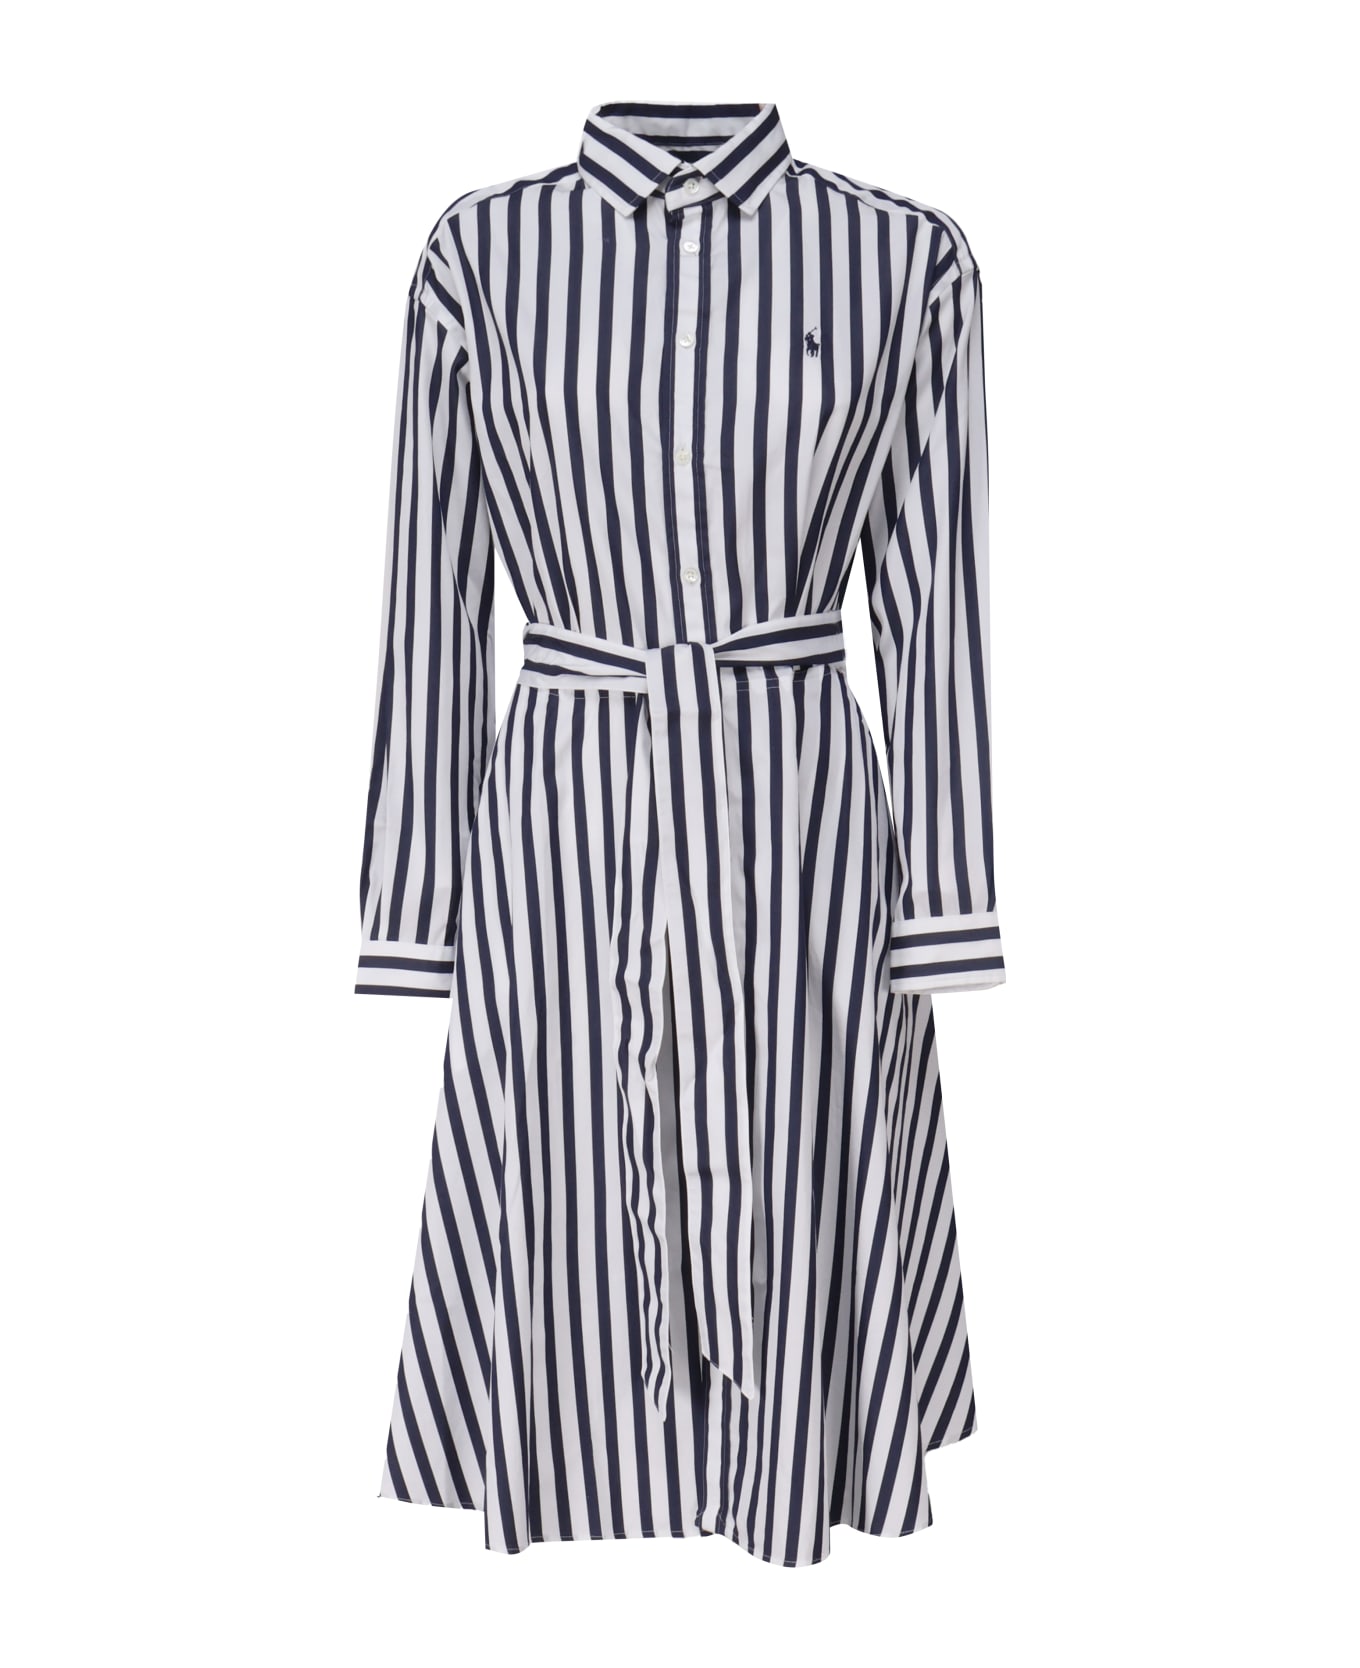 Polo Ralph Lauren Striped Shirtdress - Navy/white